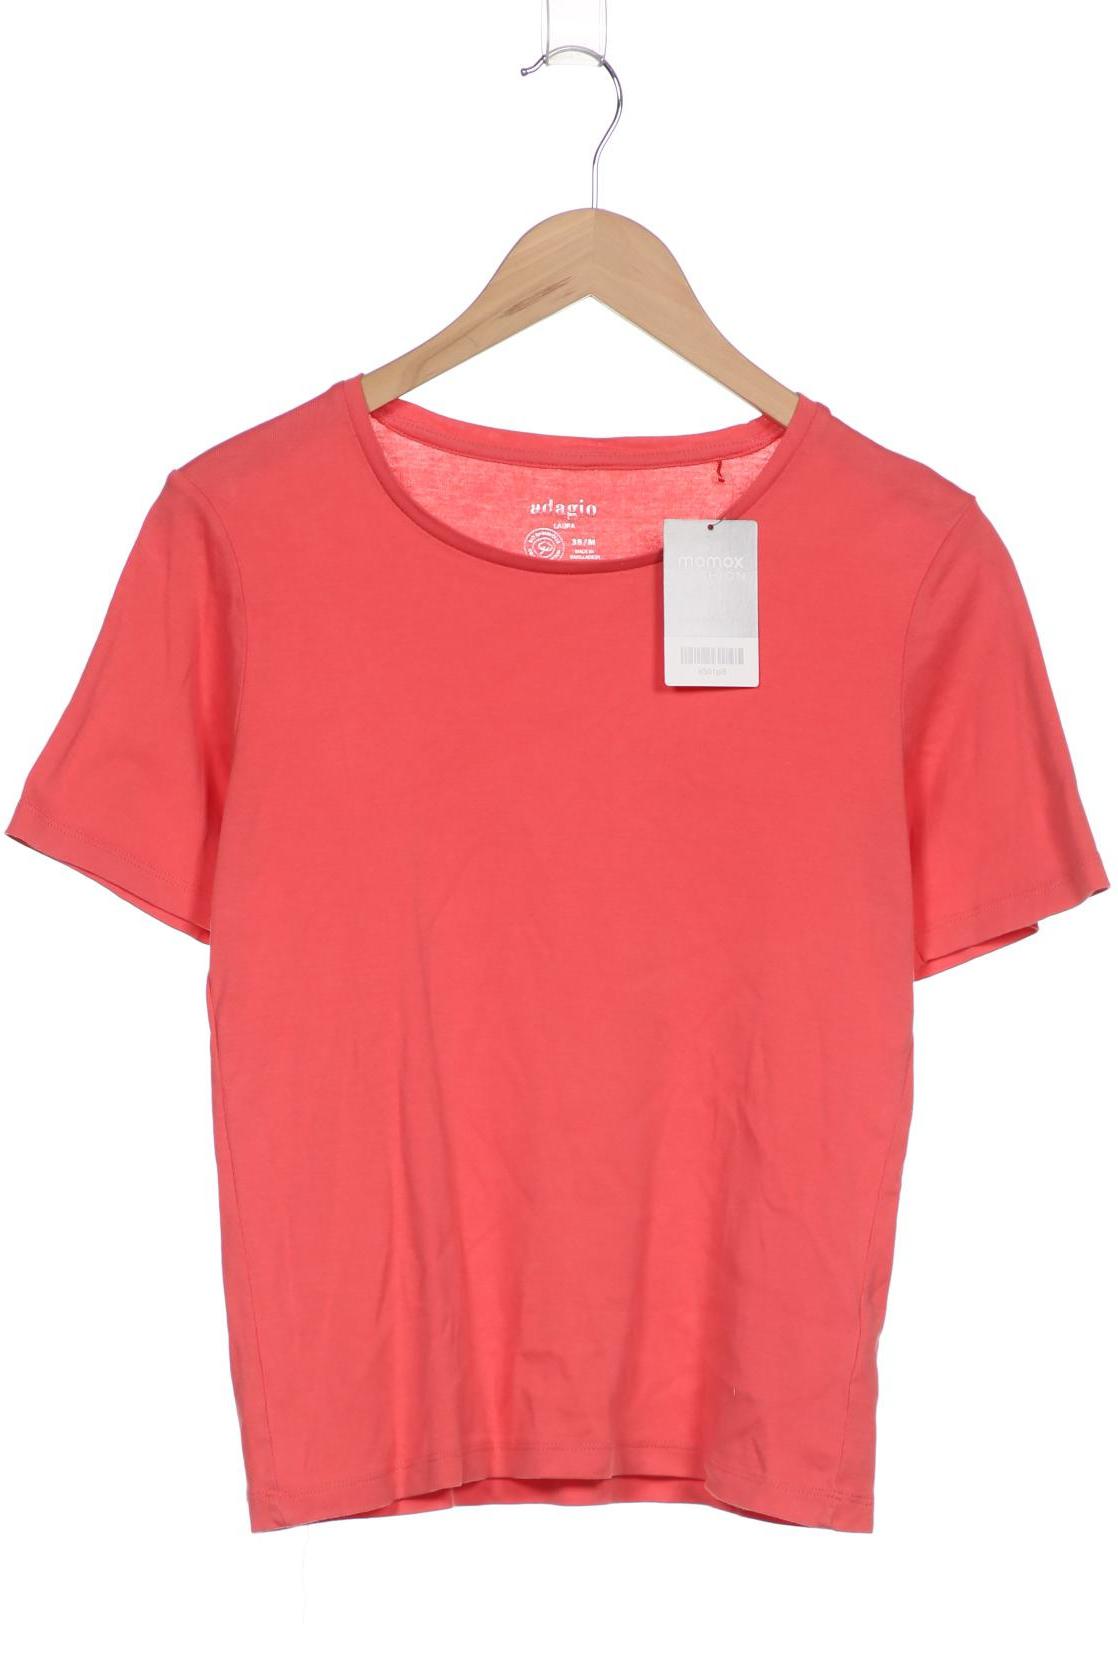 ADAGIO Damen T-Shirt, pink von ADAGIO